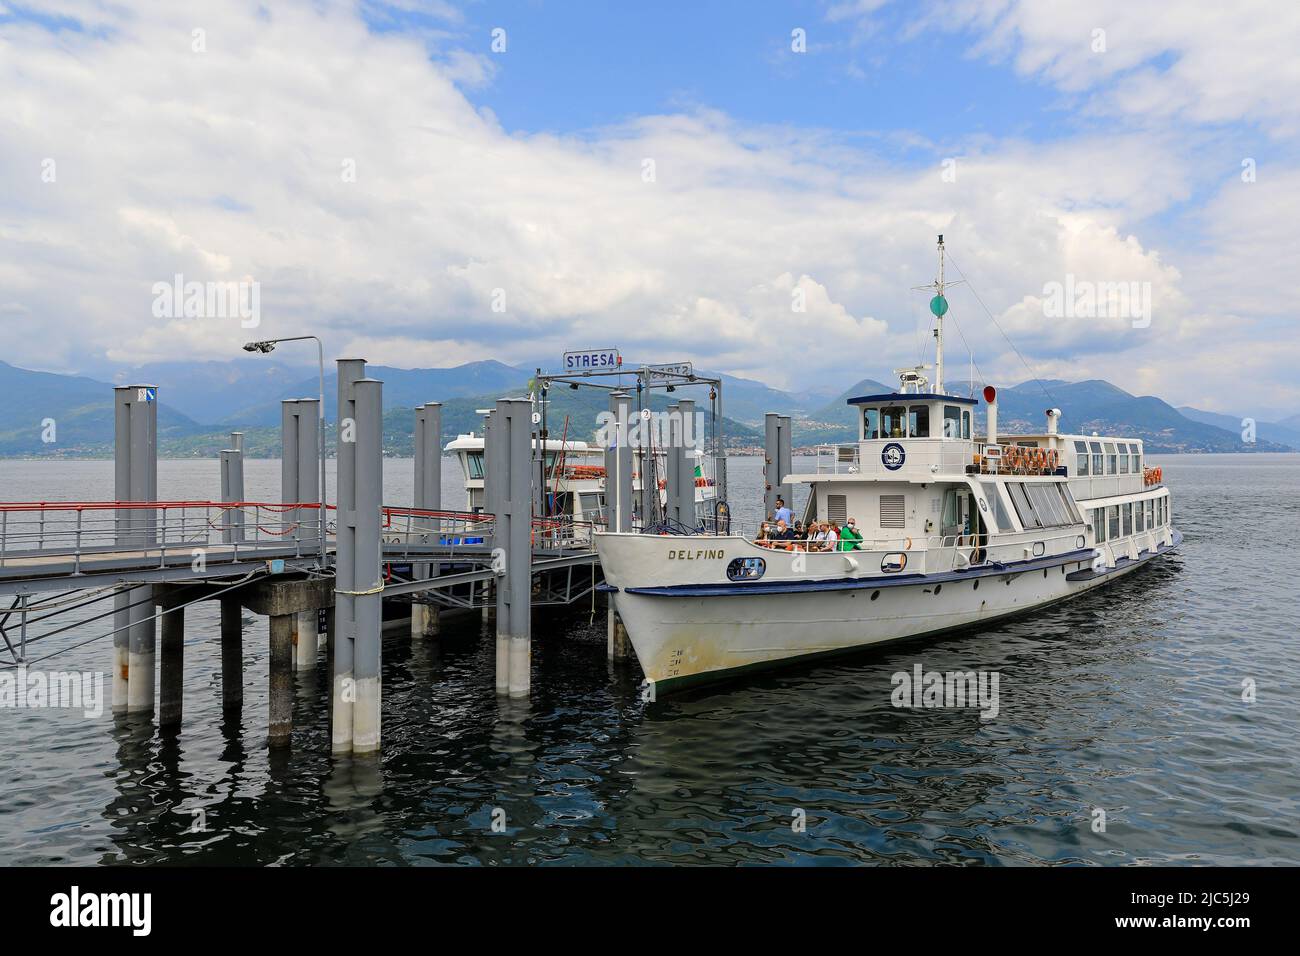 The boat jetty at Stresa, Lake Maggiore, Italy Stock Photo